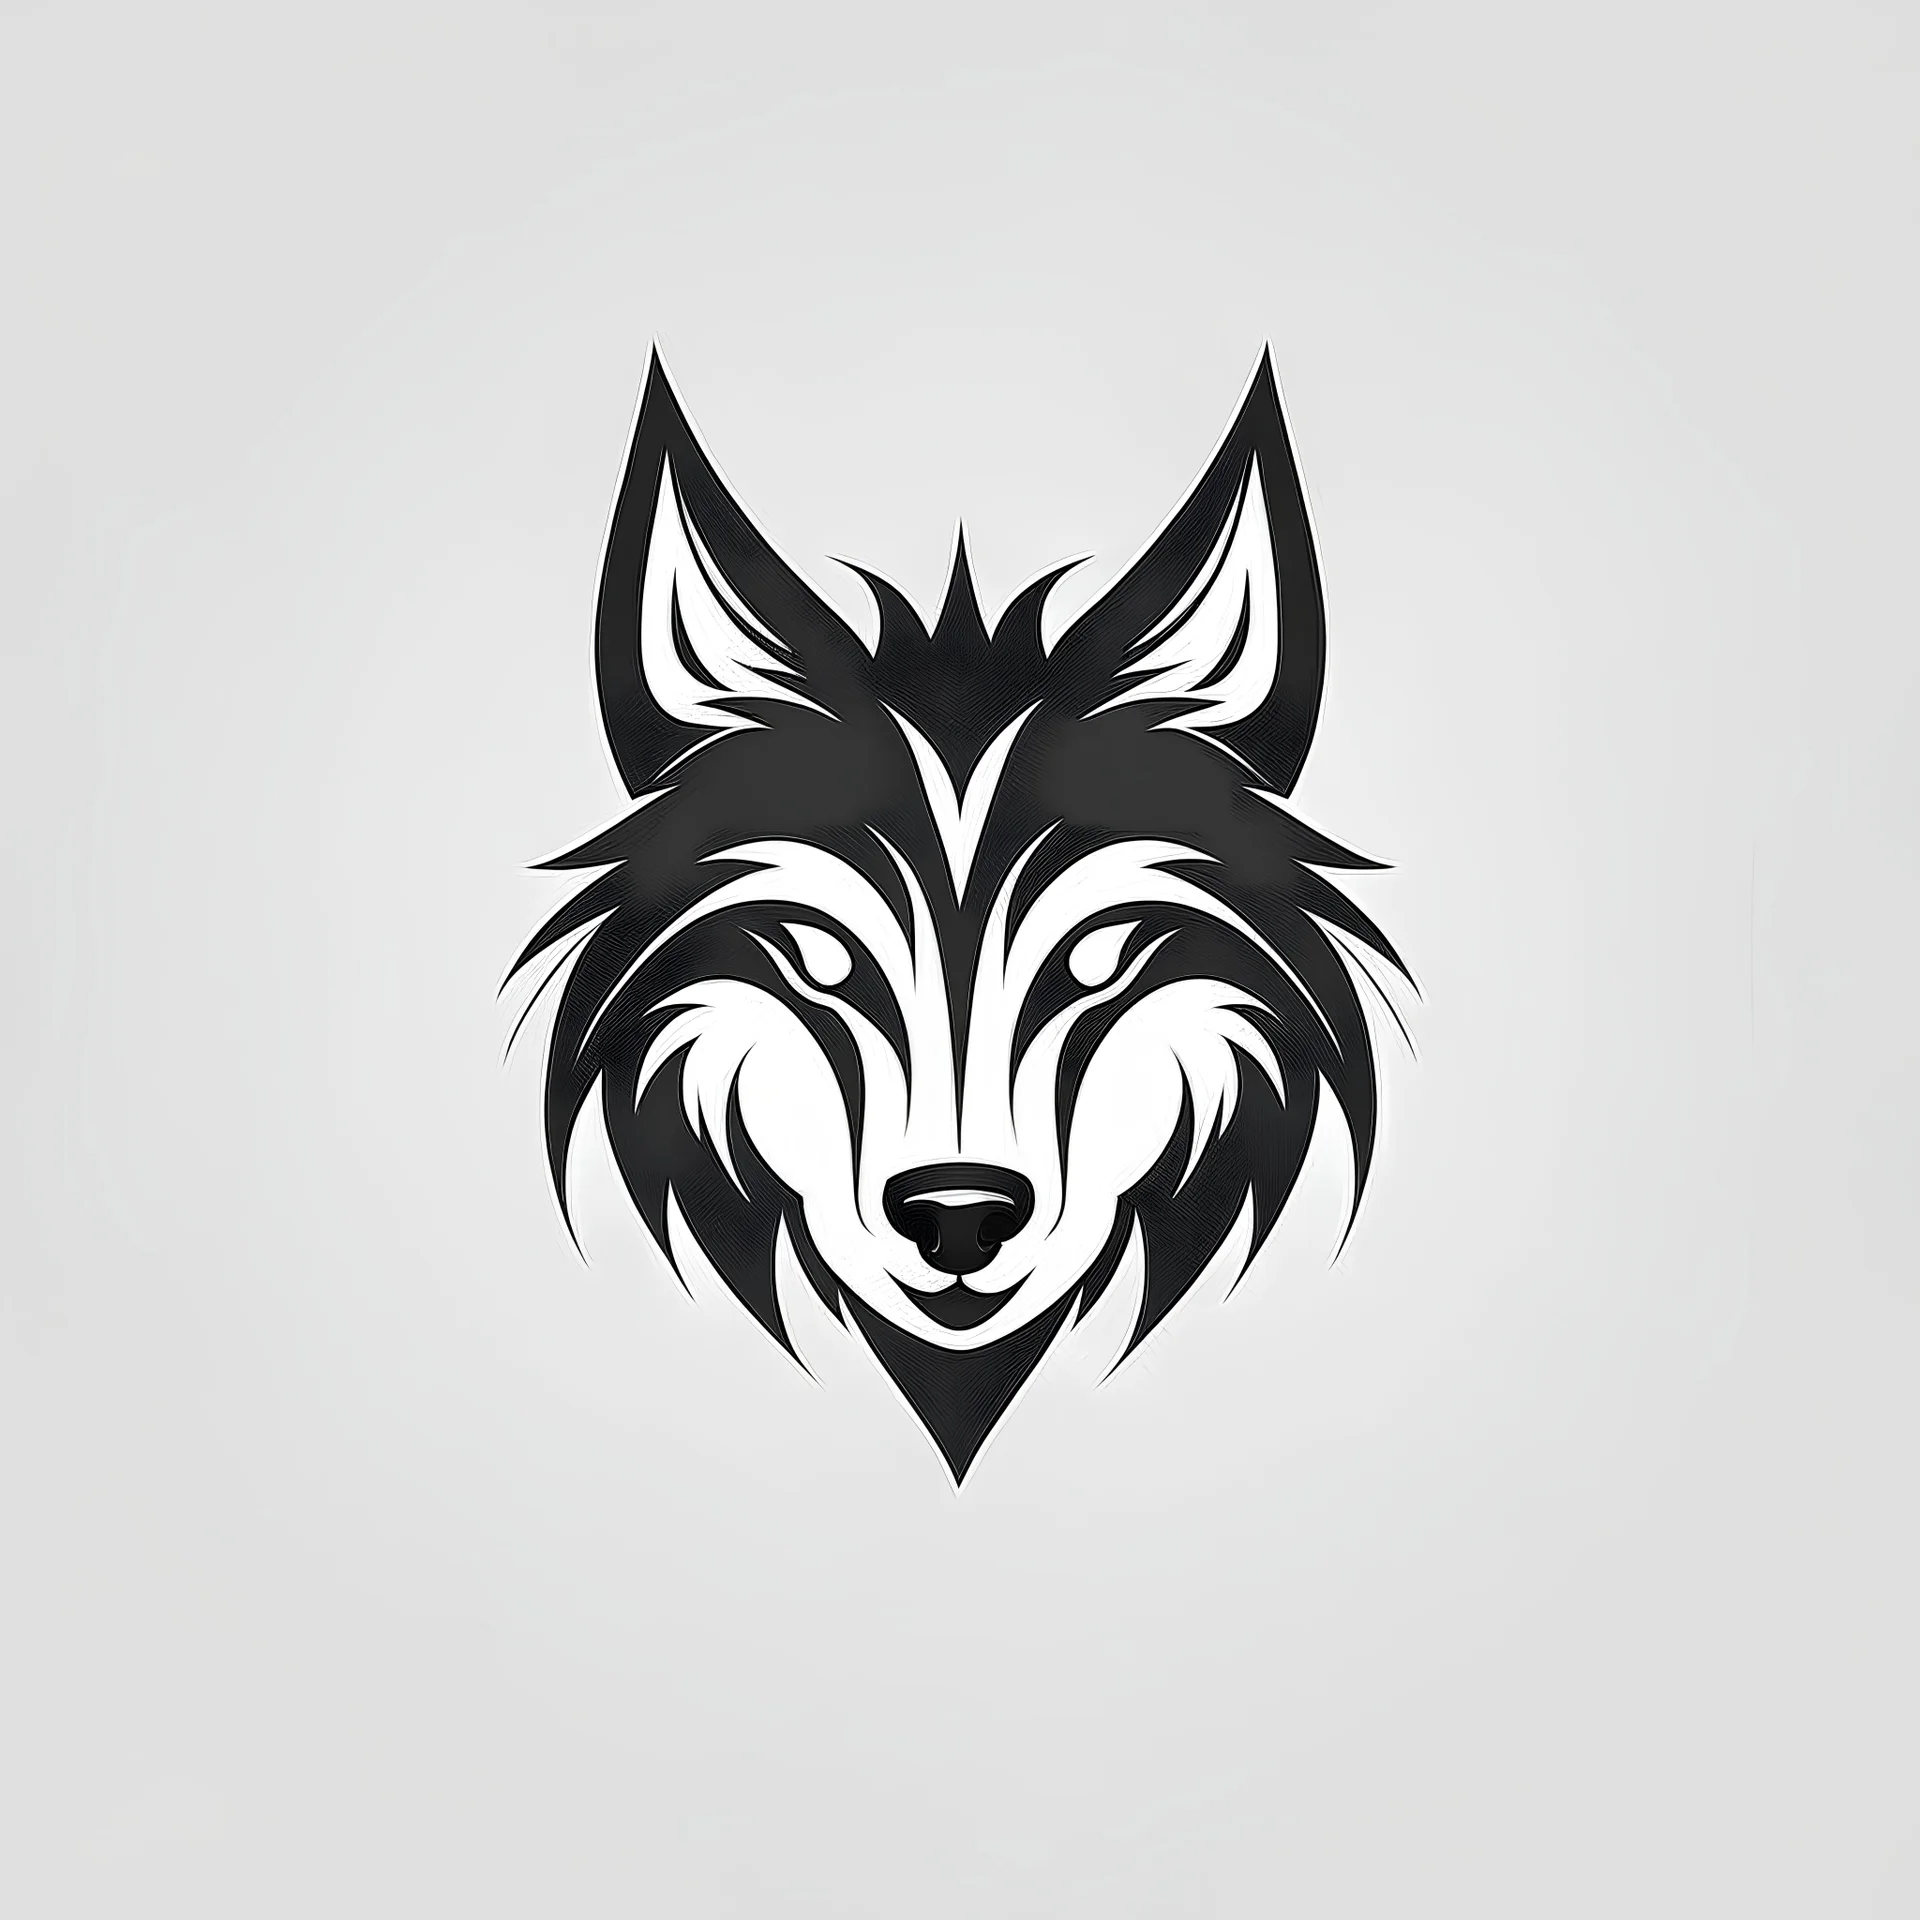 create a minimalist vector wolf logo